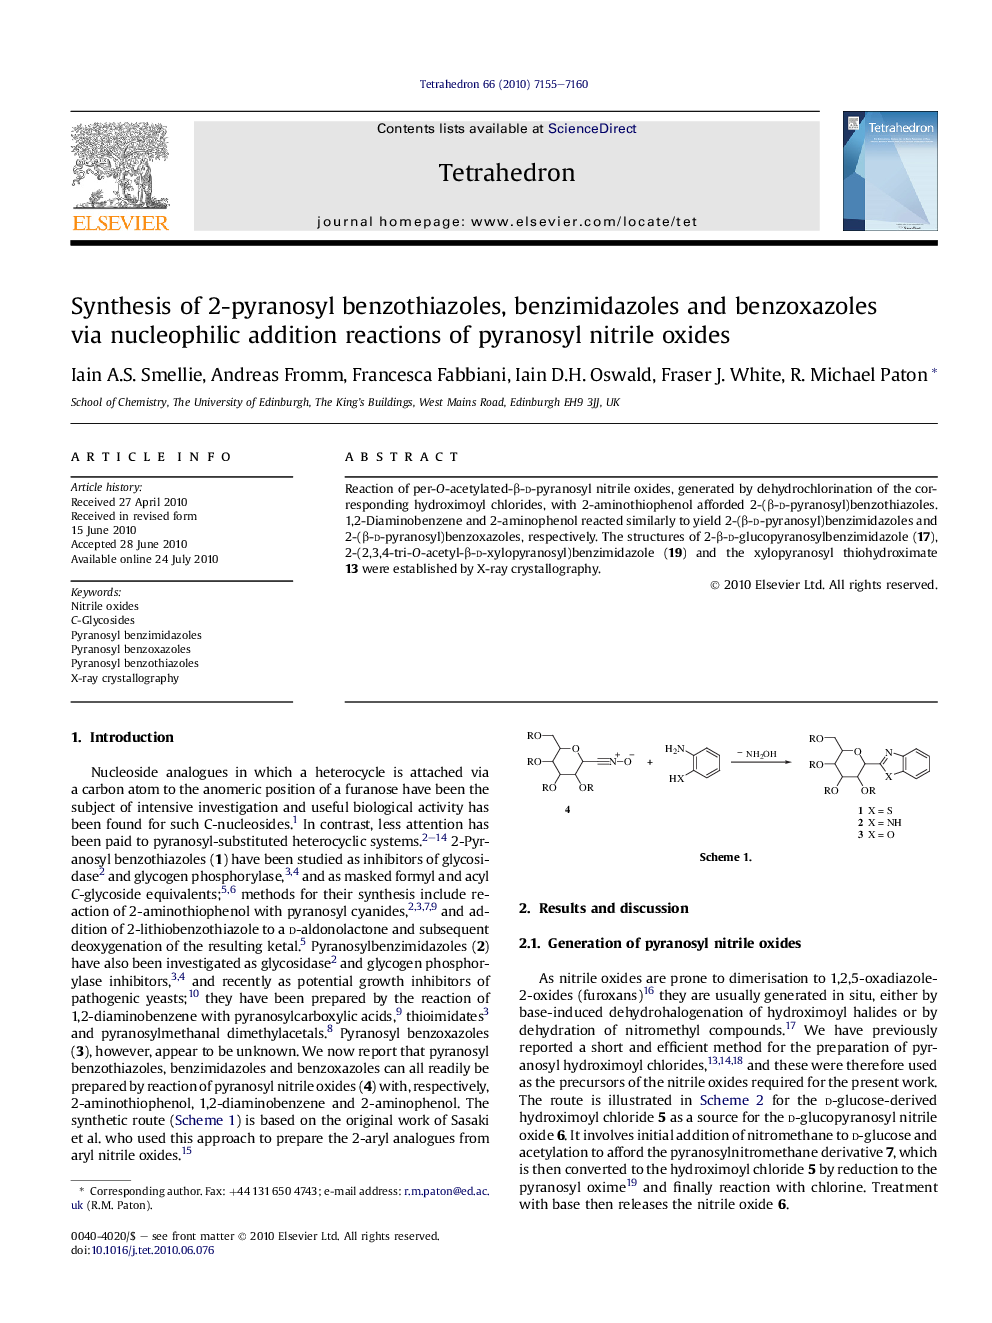 Synthesis of 2-pyranosyl benzothiazoles, benzimidazoles and benzoxazoles via nucleophilic addition reactions of pyranosyl nitrile oxides